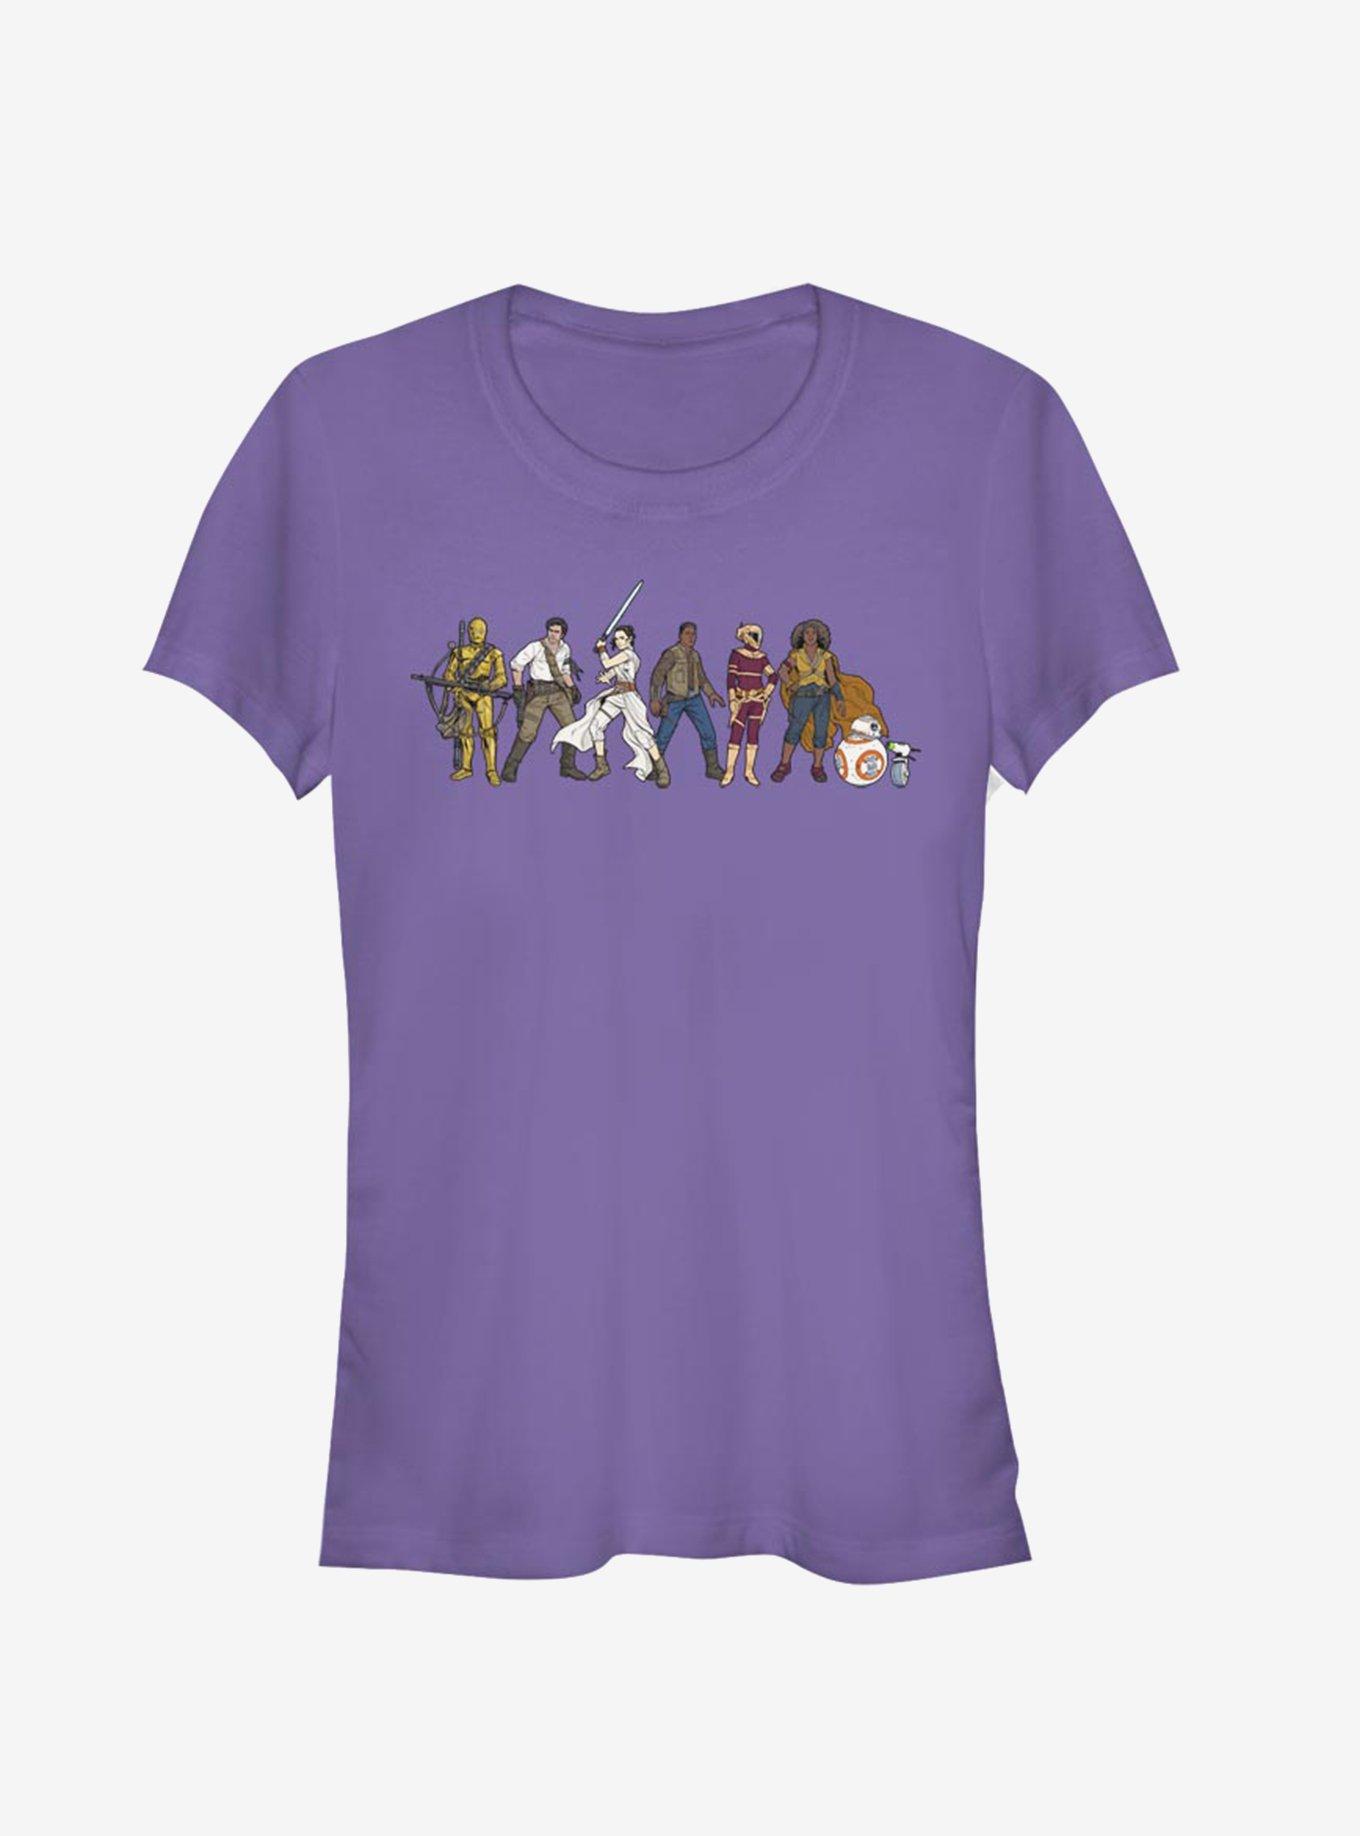 Star Wars Episode IX The Rise Of Skywalker Resistance Line-Up Girls T-Shirt